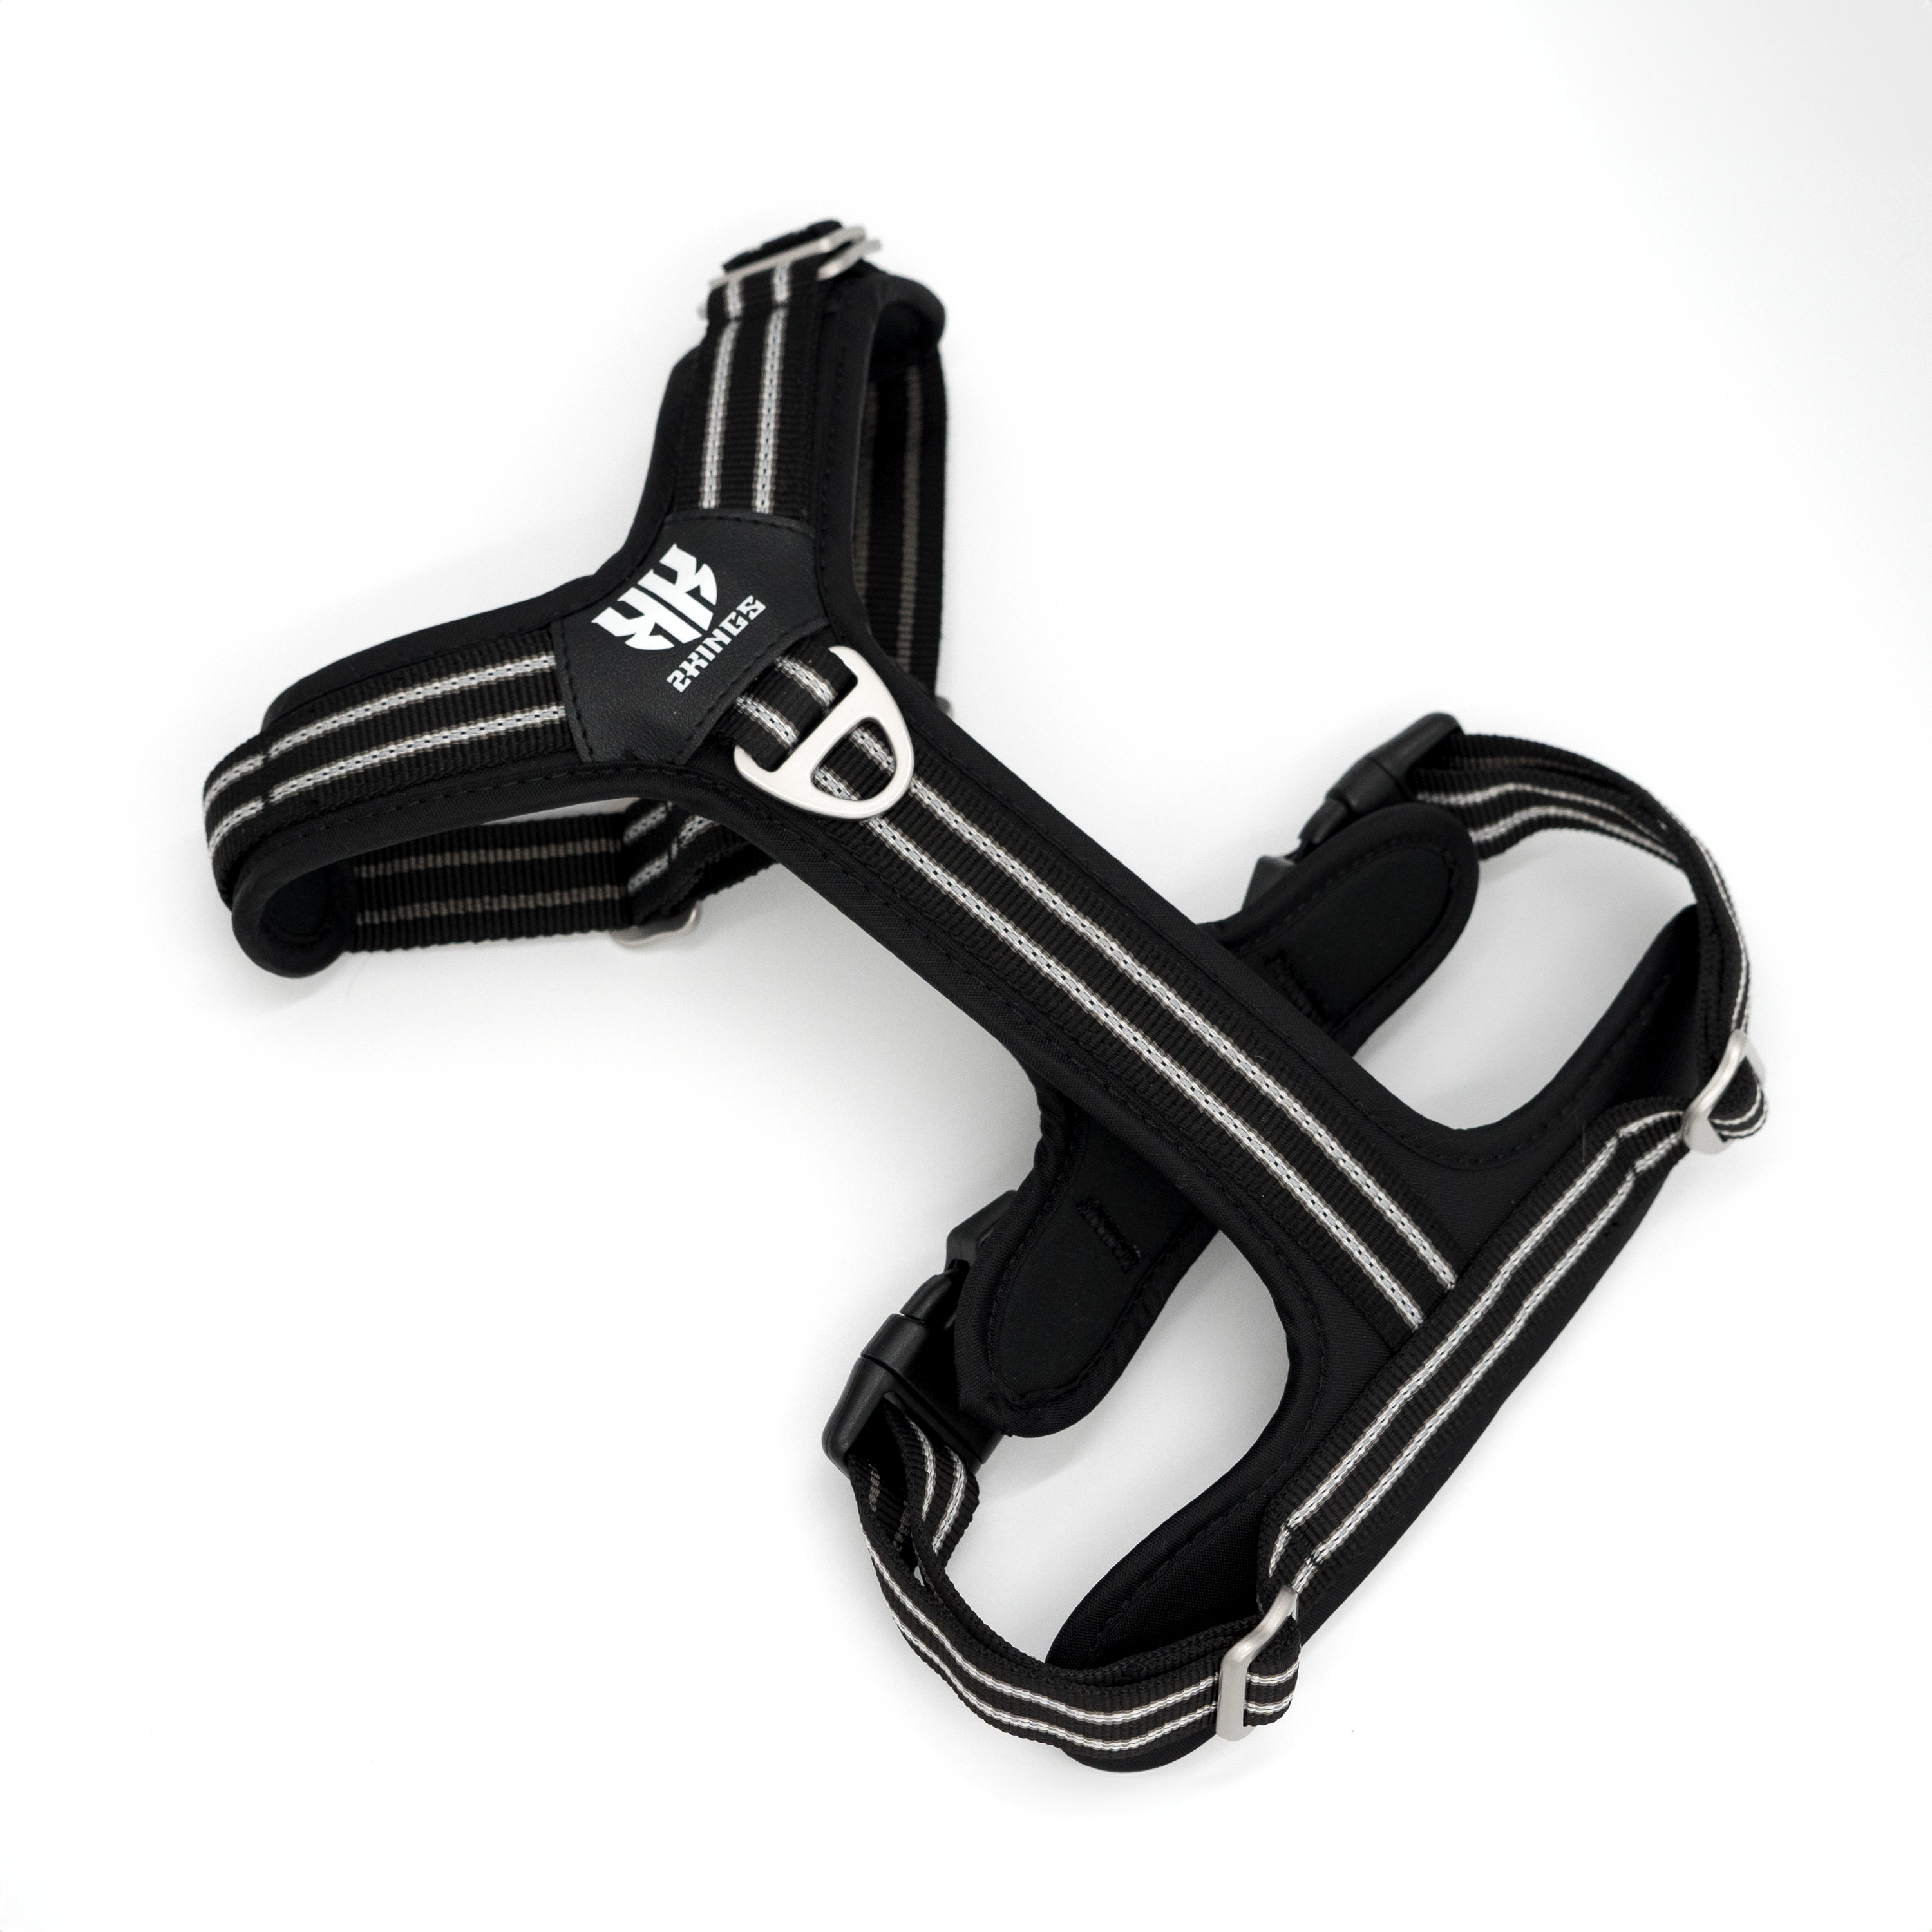 Adjustable Dog Harness & Classic Lead Set- Reflective & Lightweight - Black.